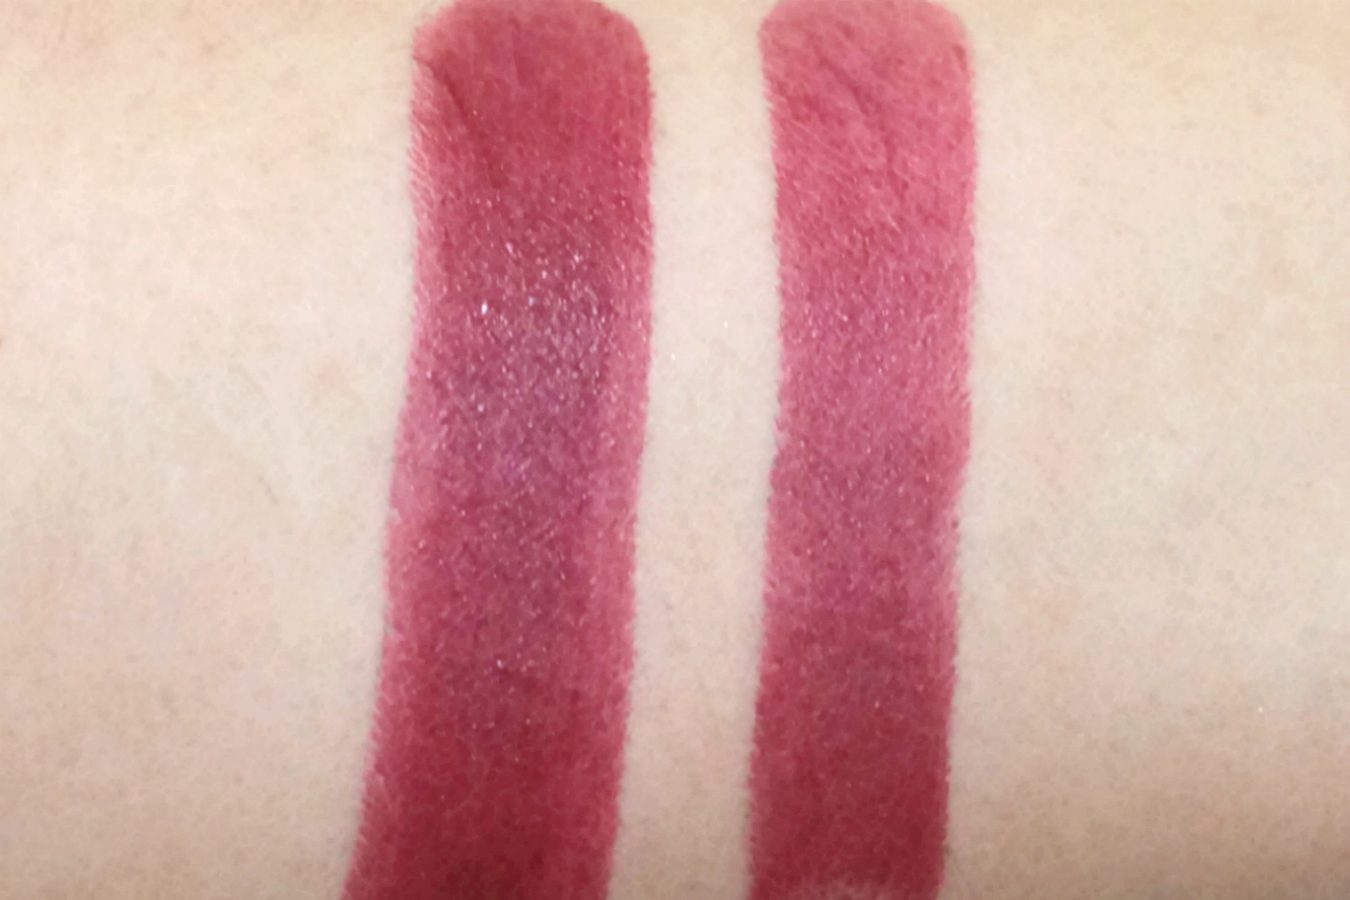 Burberry Lip Velvet Long Wear Lipstick in Oxblood No. 437 | Review, Swatch,  Photos - Jello Beans